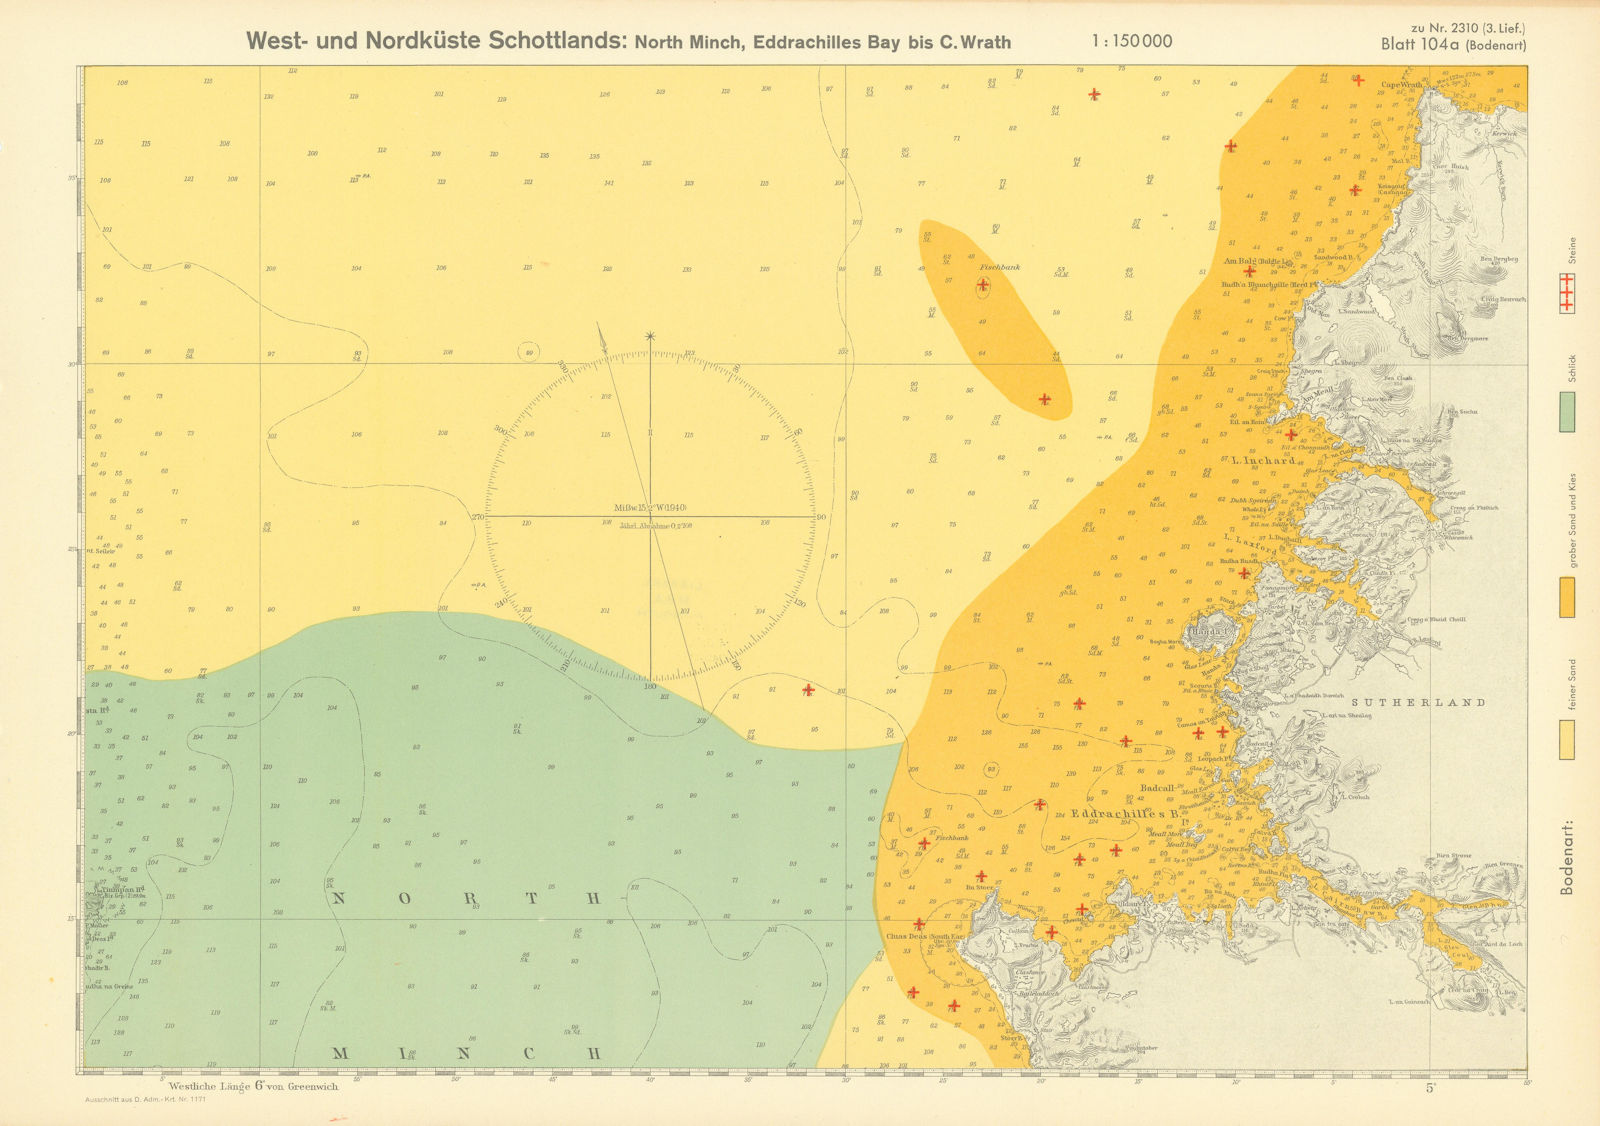 104a. Sutherland NW coast. Cape Wrath. Scotland. KRIEGSMARINE Nazi map 1940